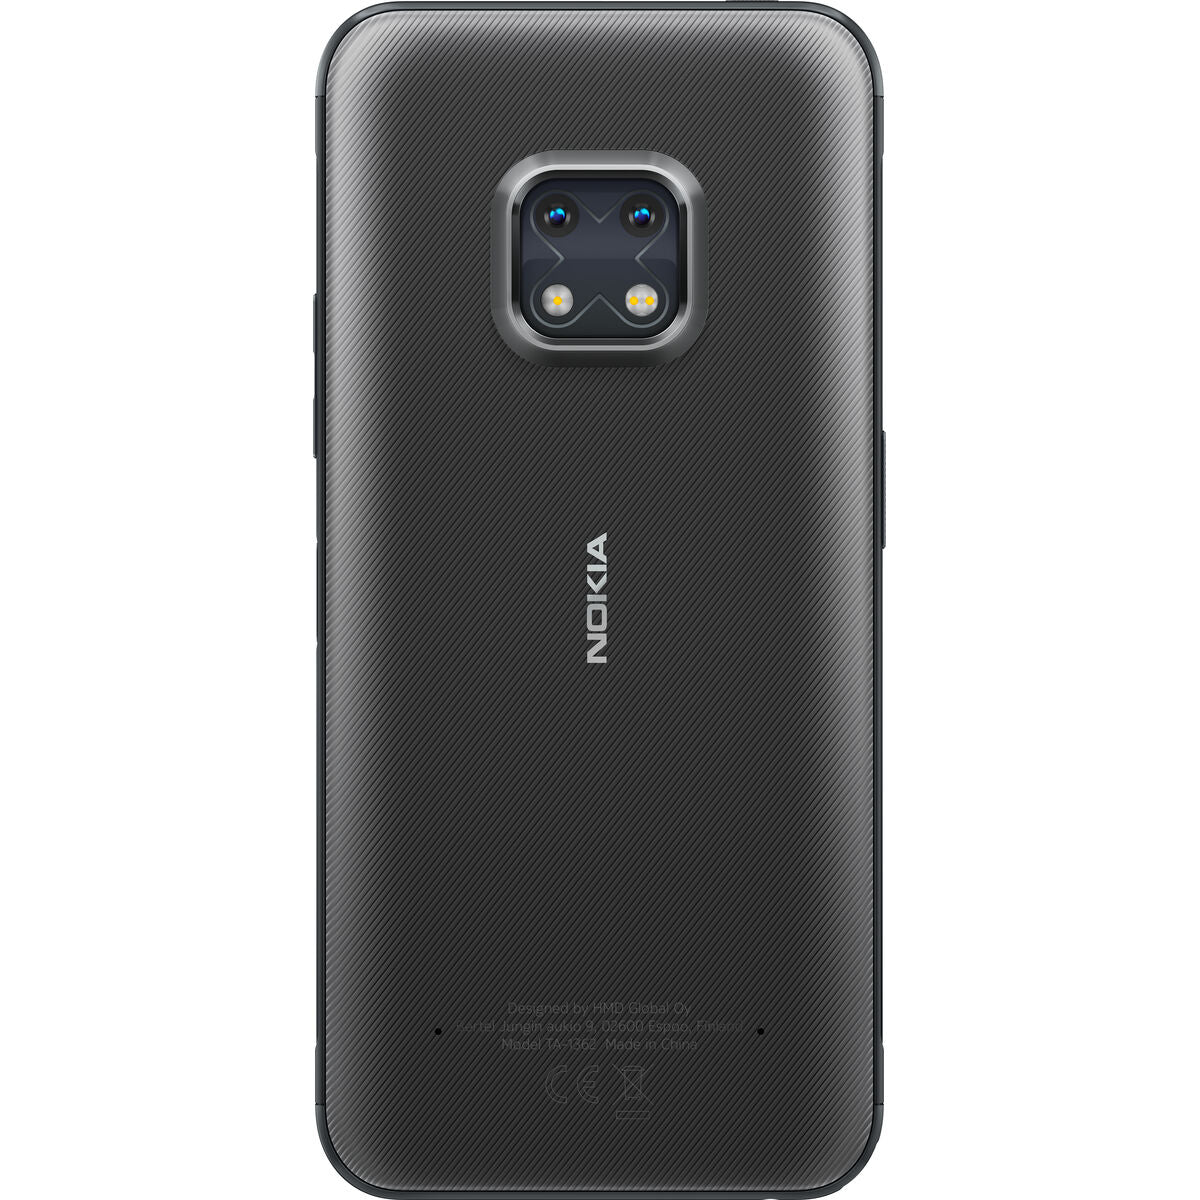 Smartphone Nokia XR20 6,67" 6 GB RAM 128 GB Schwarz - CA International 